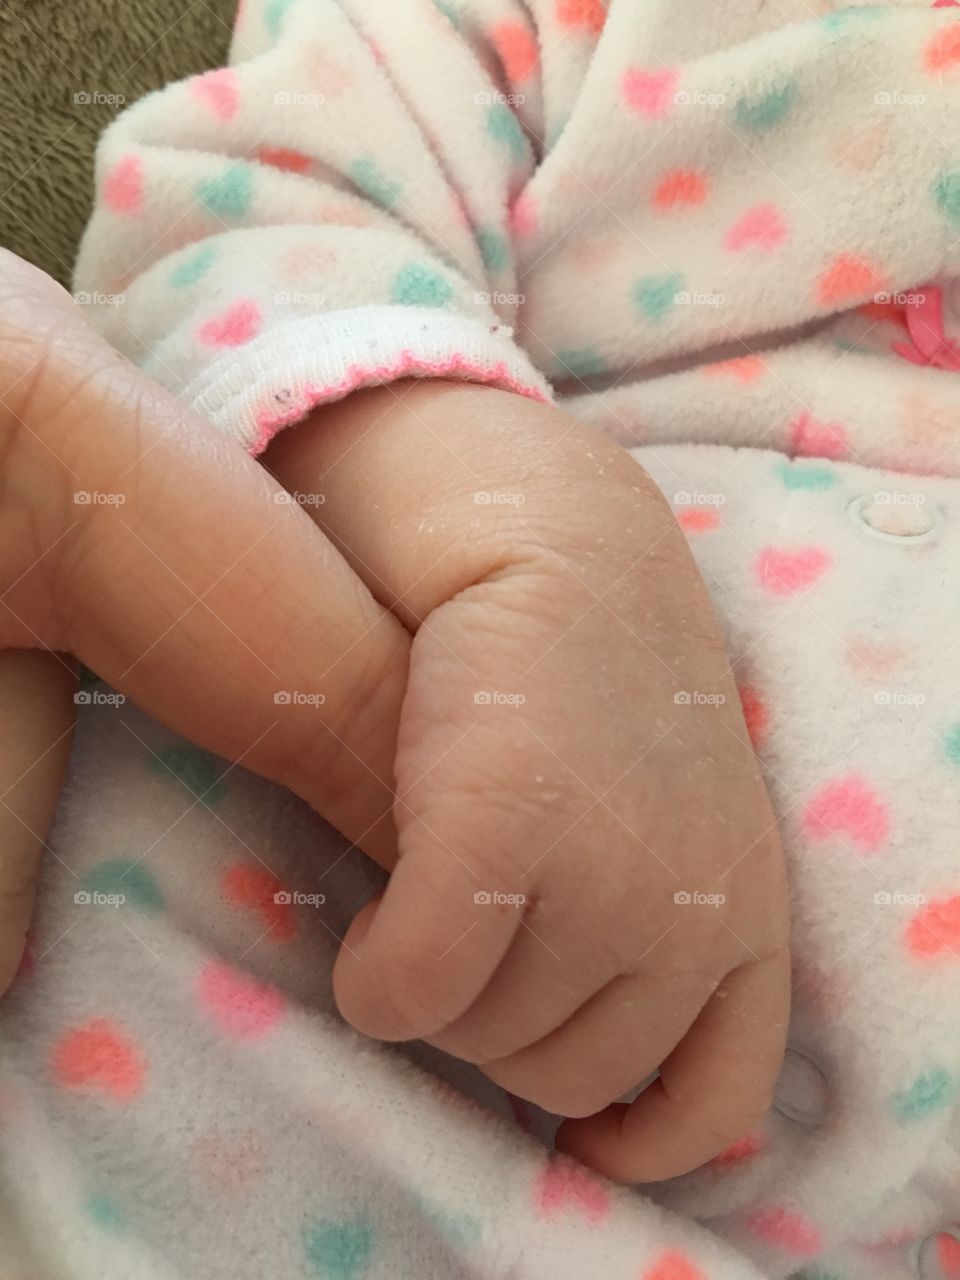 Newborn grip